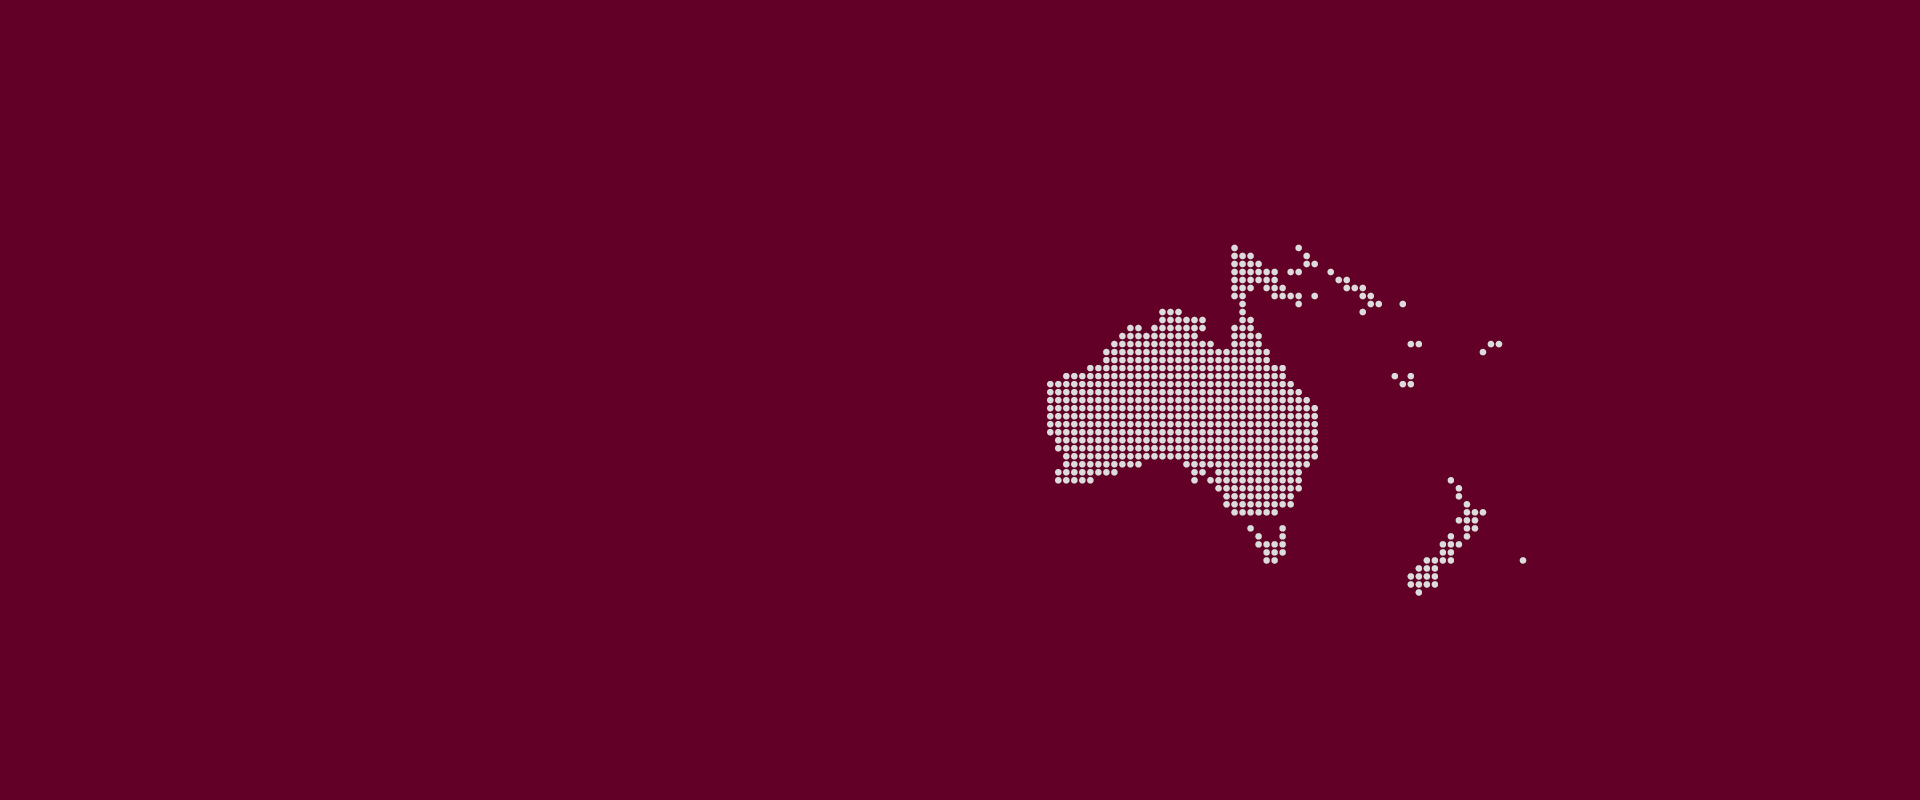 DB Web Topbanner Map Australia02 1920X800px